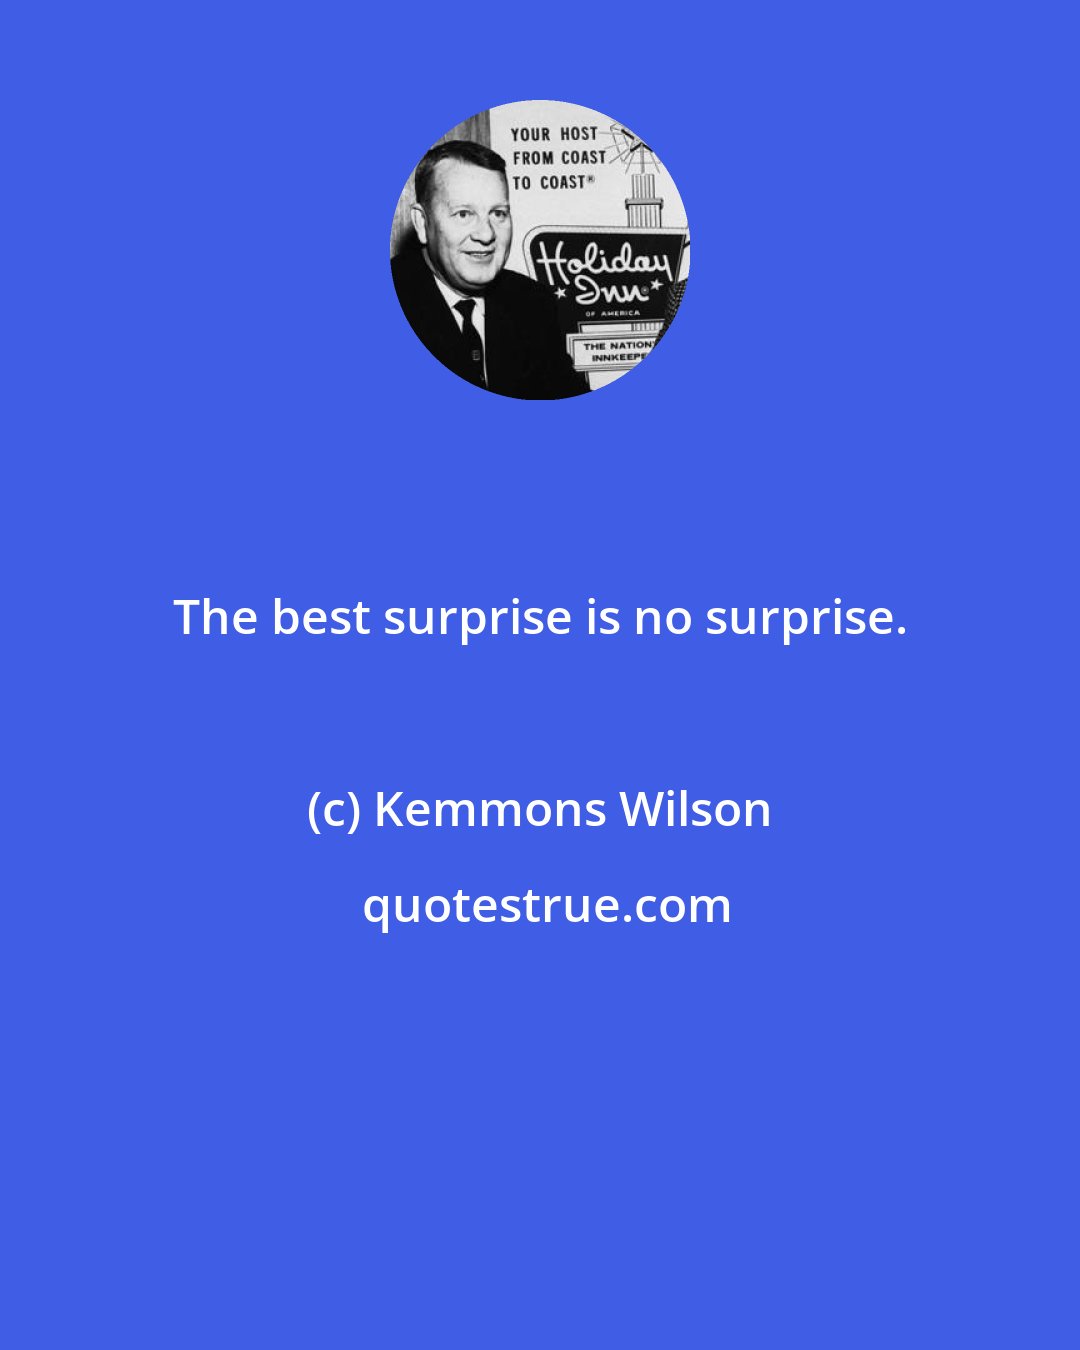 Kemmons Wilson: The best surprise is no surprise.